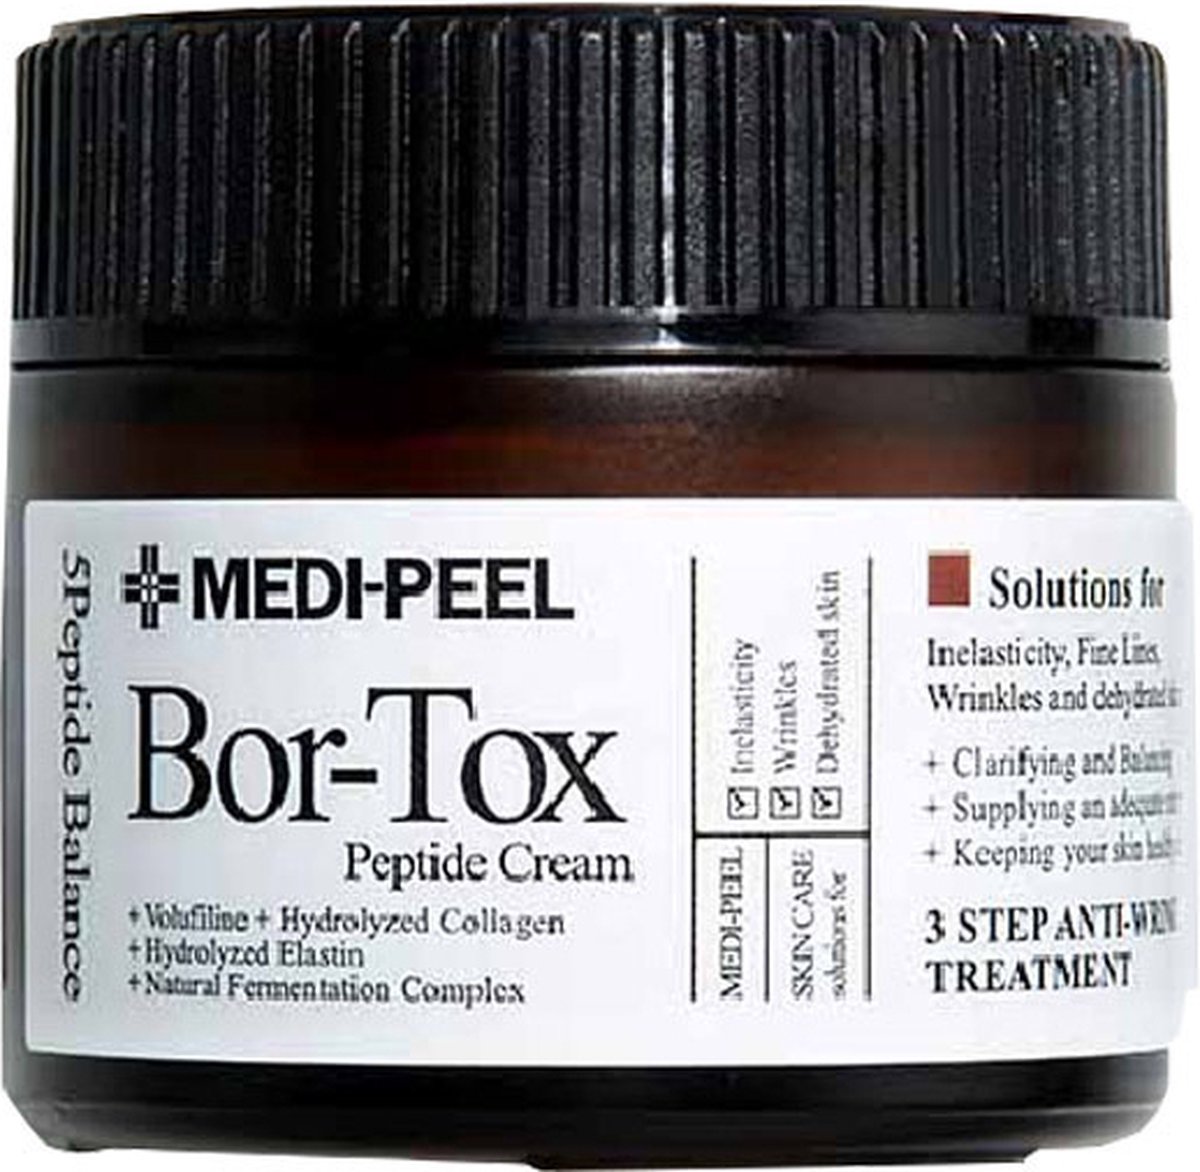 Medipeel Bor-Tox Peptide Cream 50 g 50ml